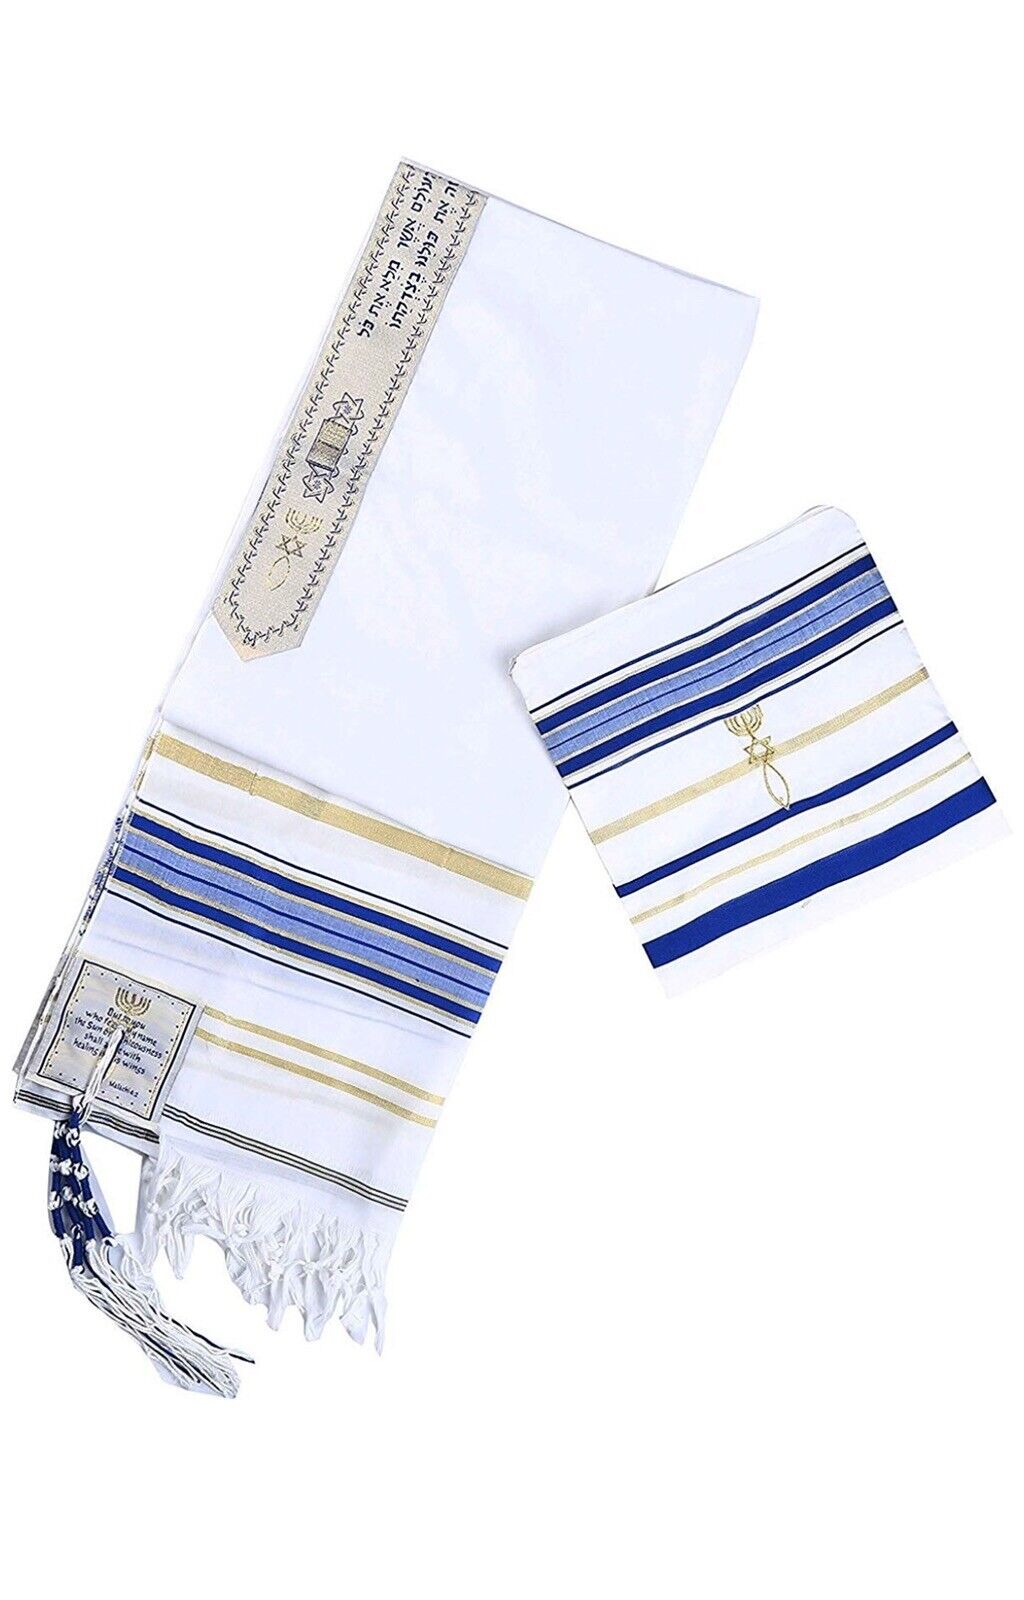 Jewish Messianic Prayer Shawls -1 Dozen Includes Matching Tallit Bags &12 Shawls